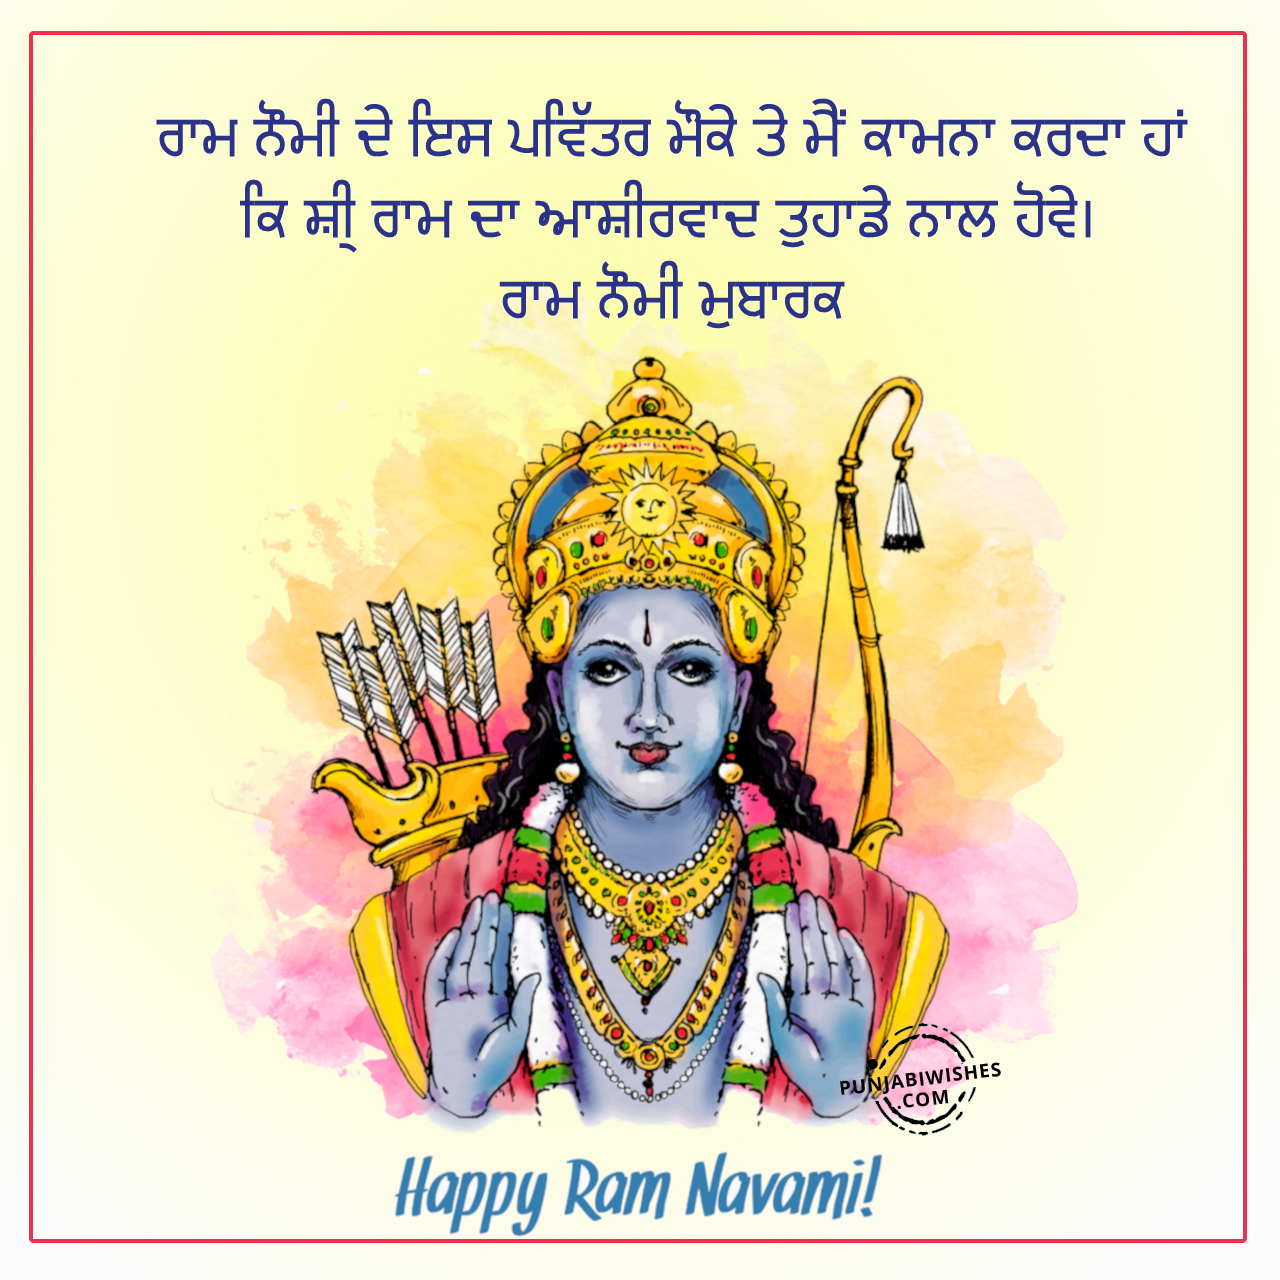 Shri Ram Navami Wishes In Punjabi Images1